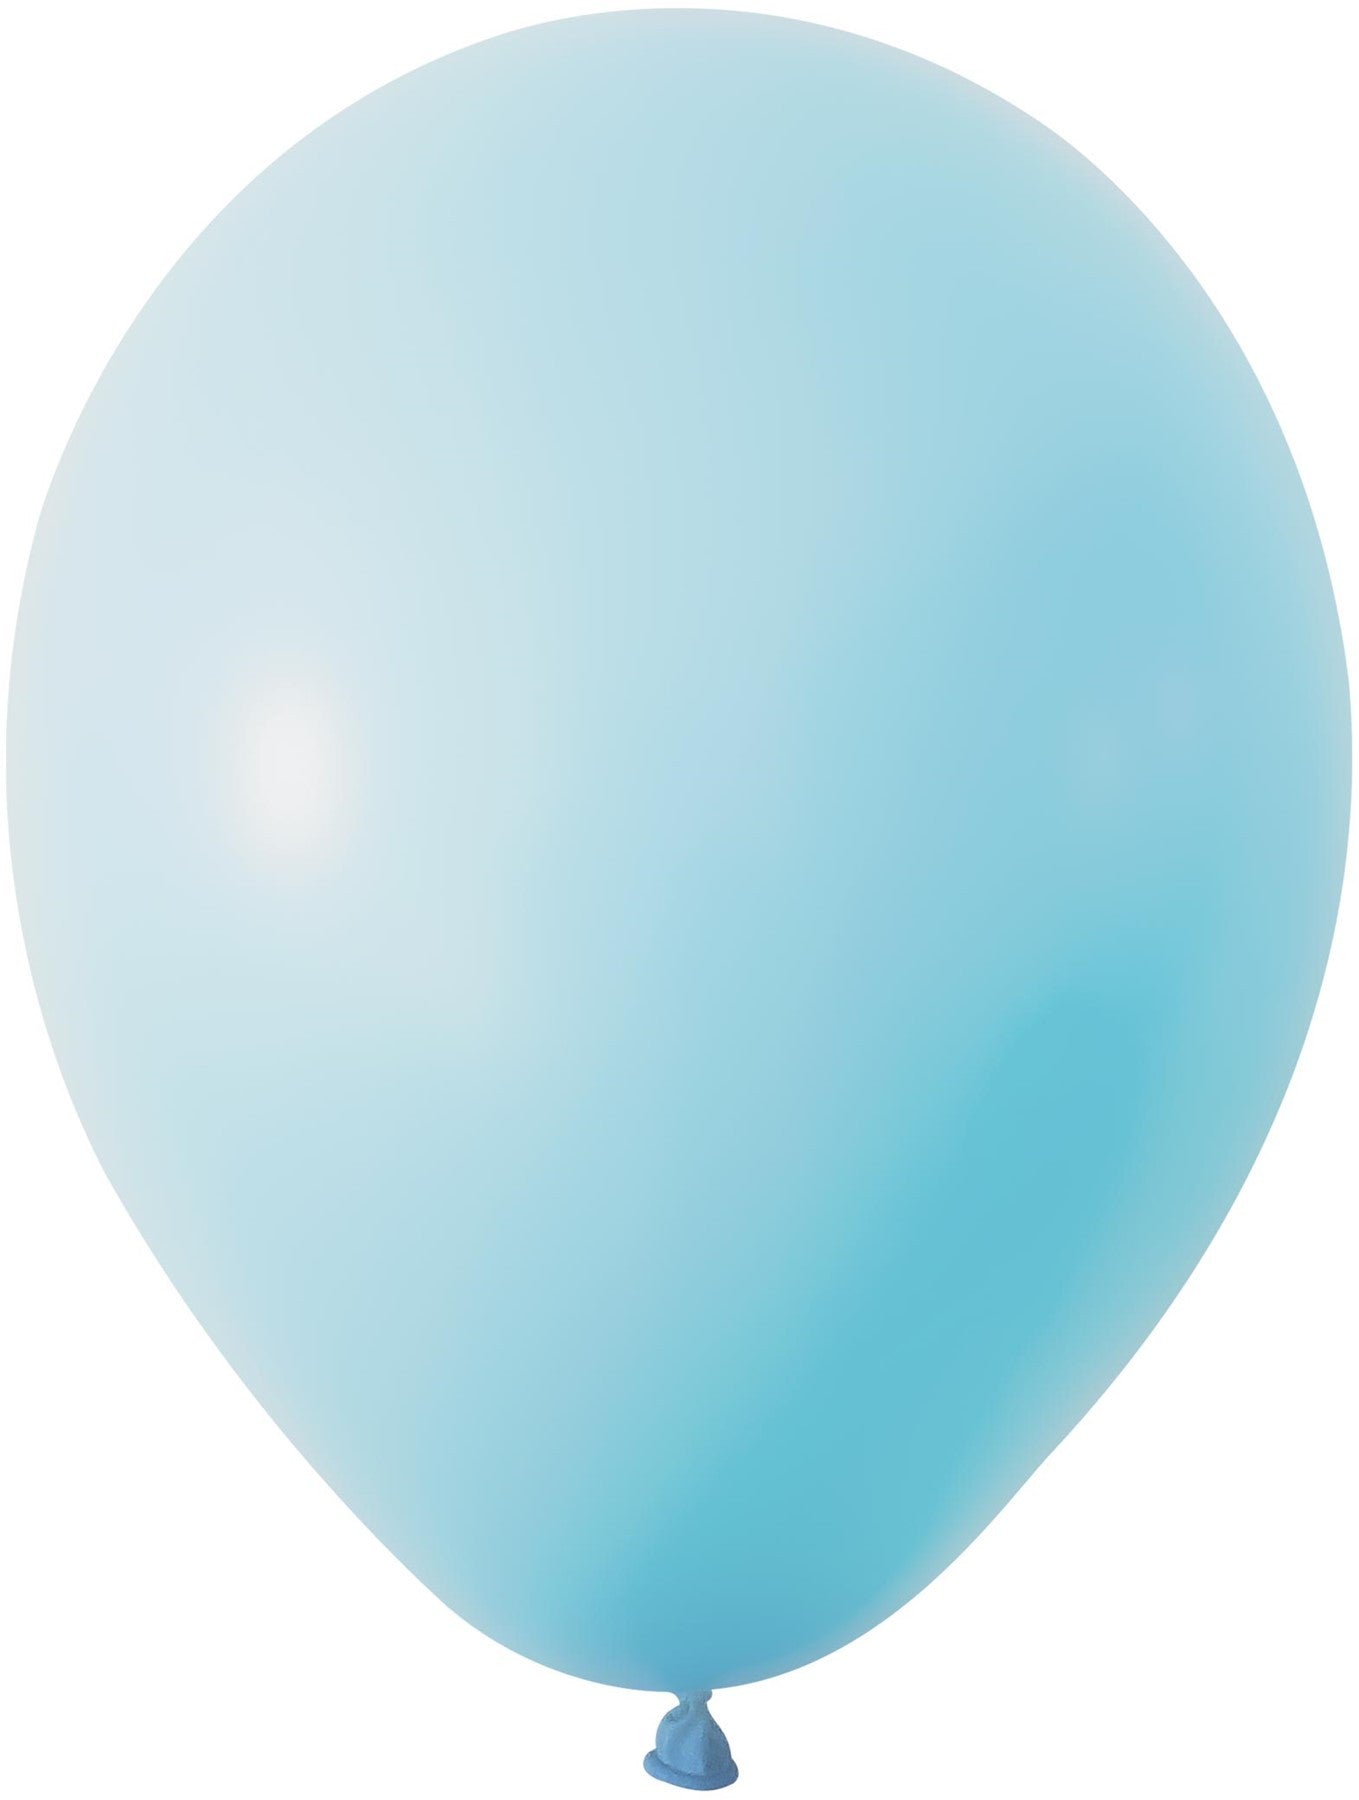 View Macaron Blue Latex Balloon 12 inch Pk 100 information